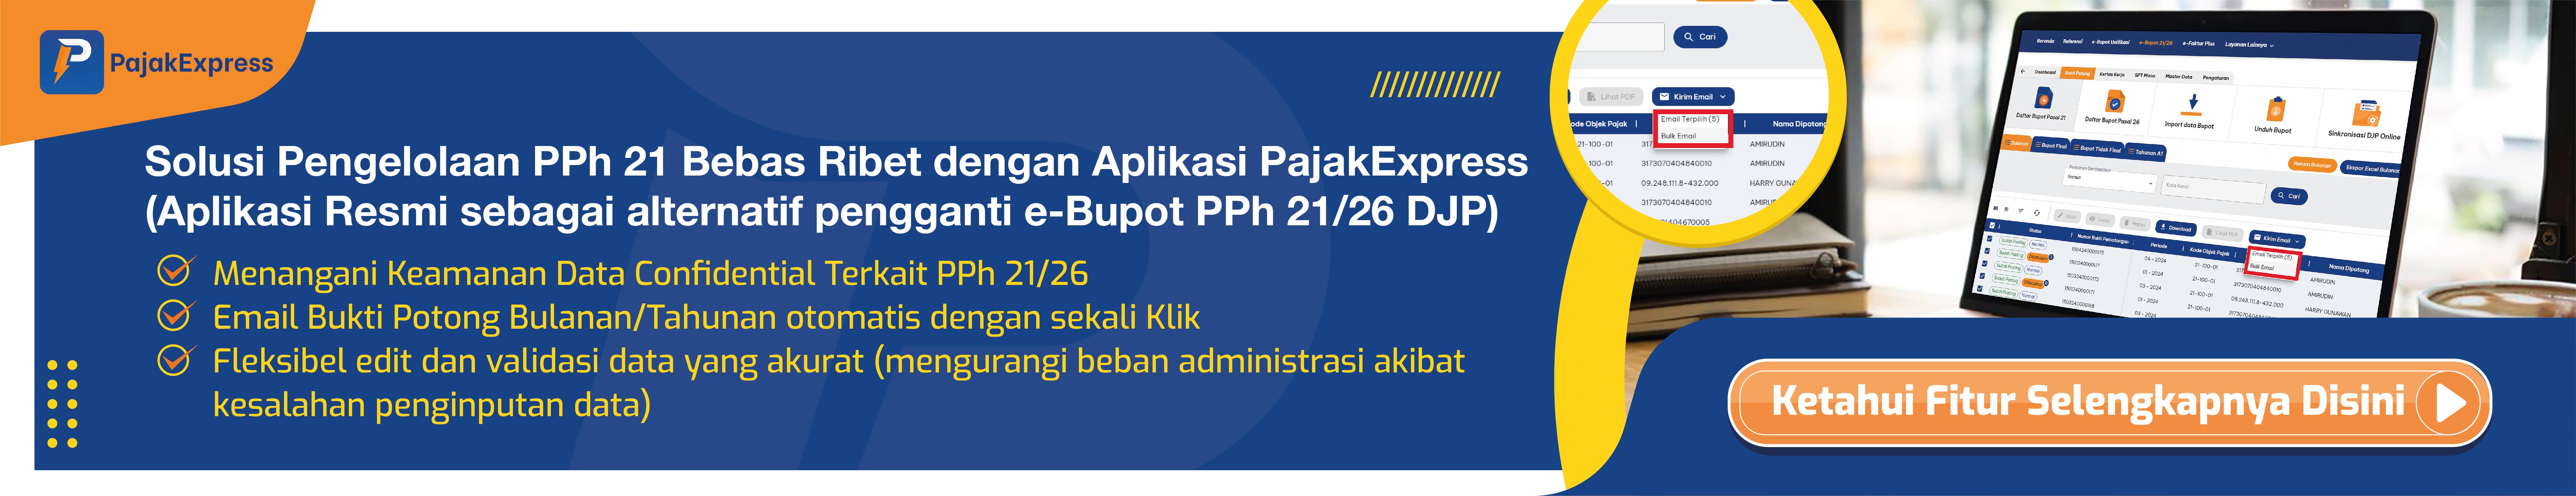 PajakExpress eBupot PPh 21(NEW)